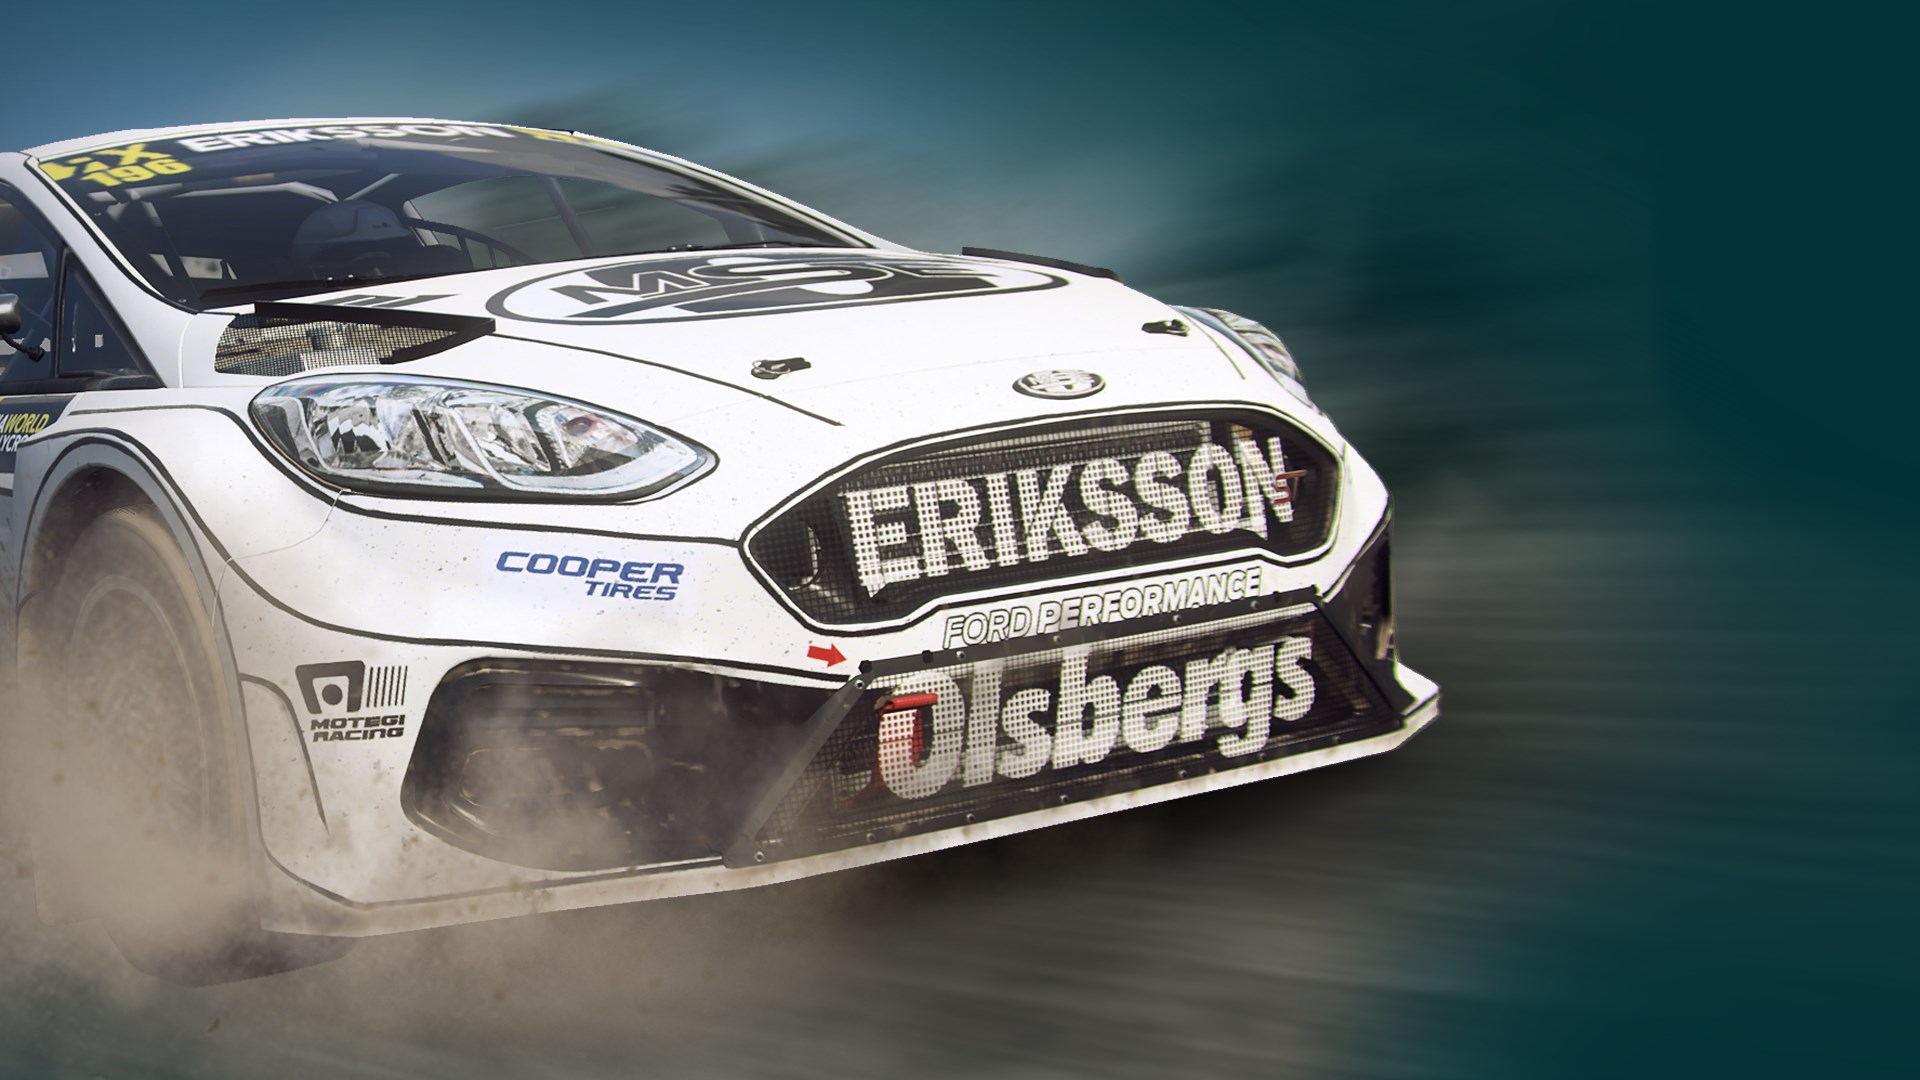 Acquista WS - Ford Fiesta Rallycross (MK8) - Microsoft Store it-SM